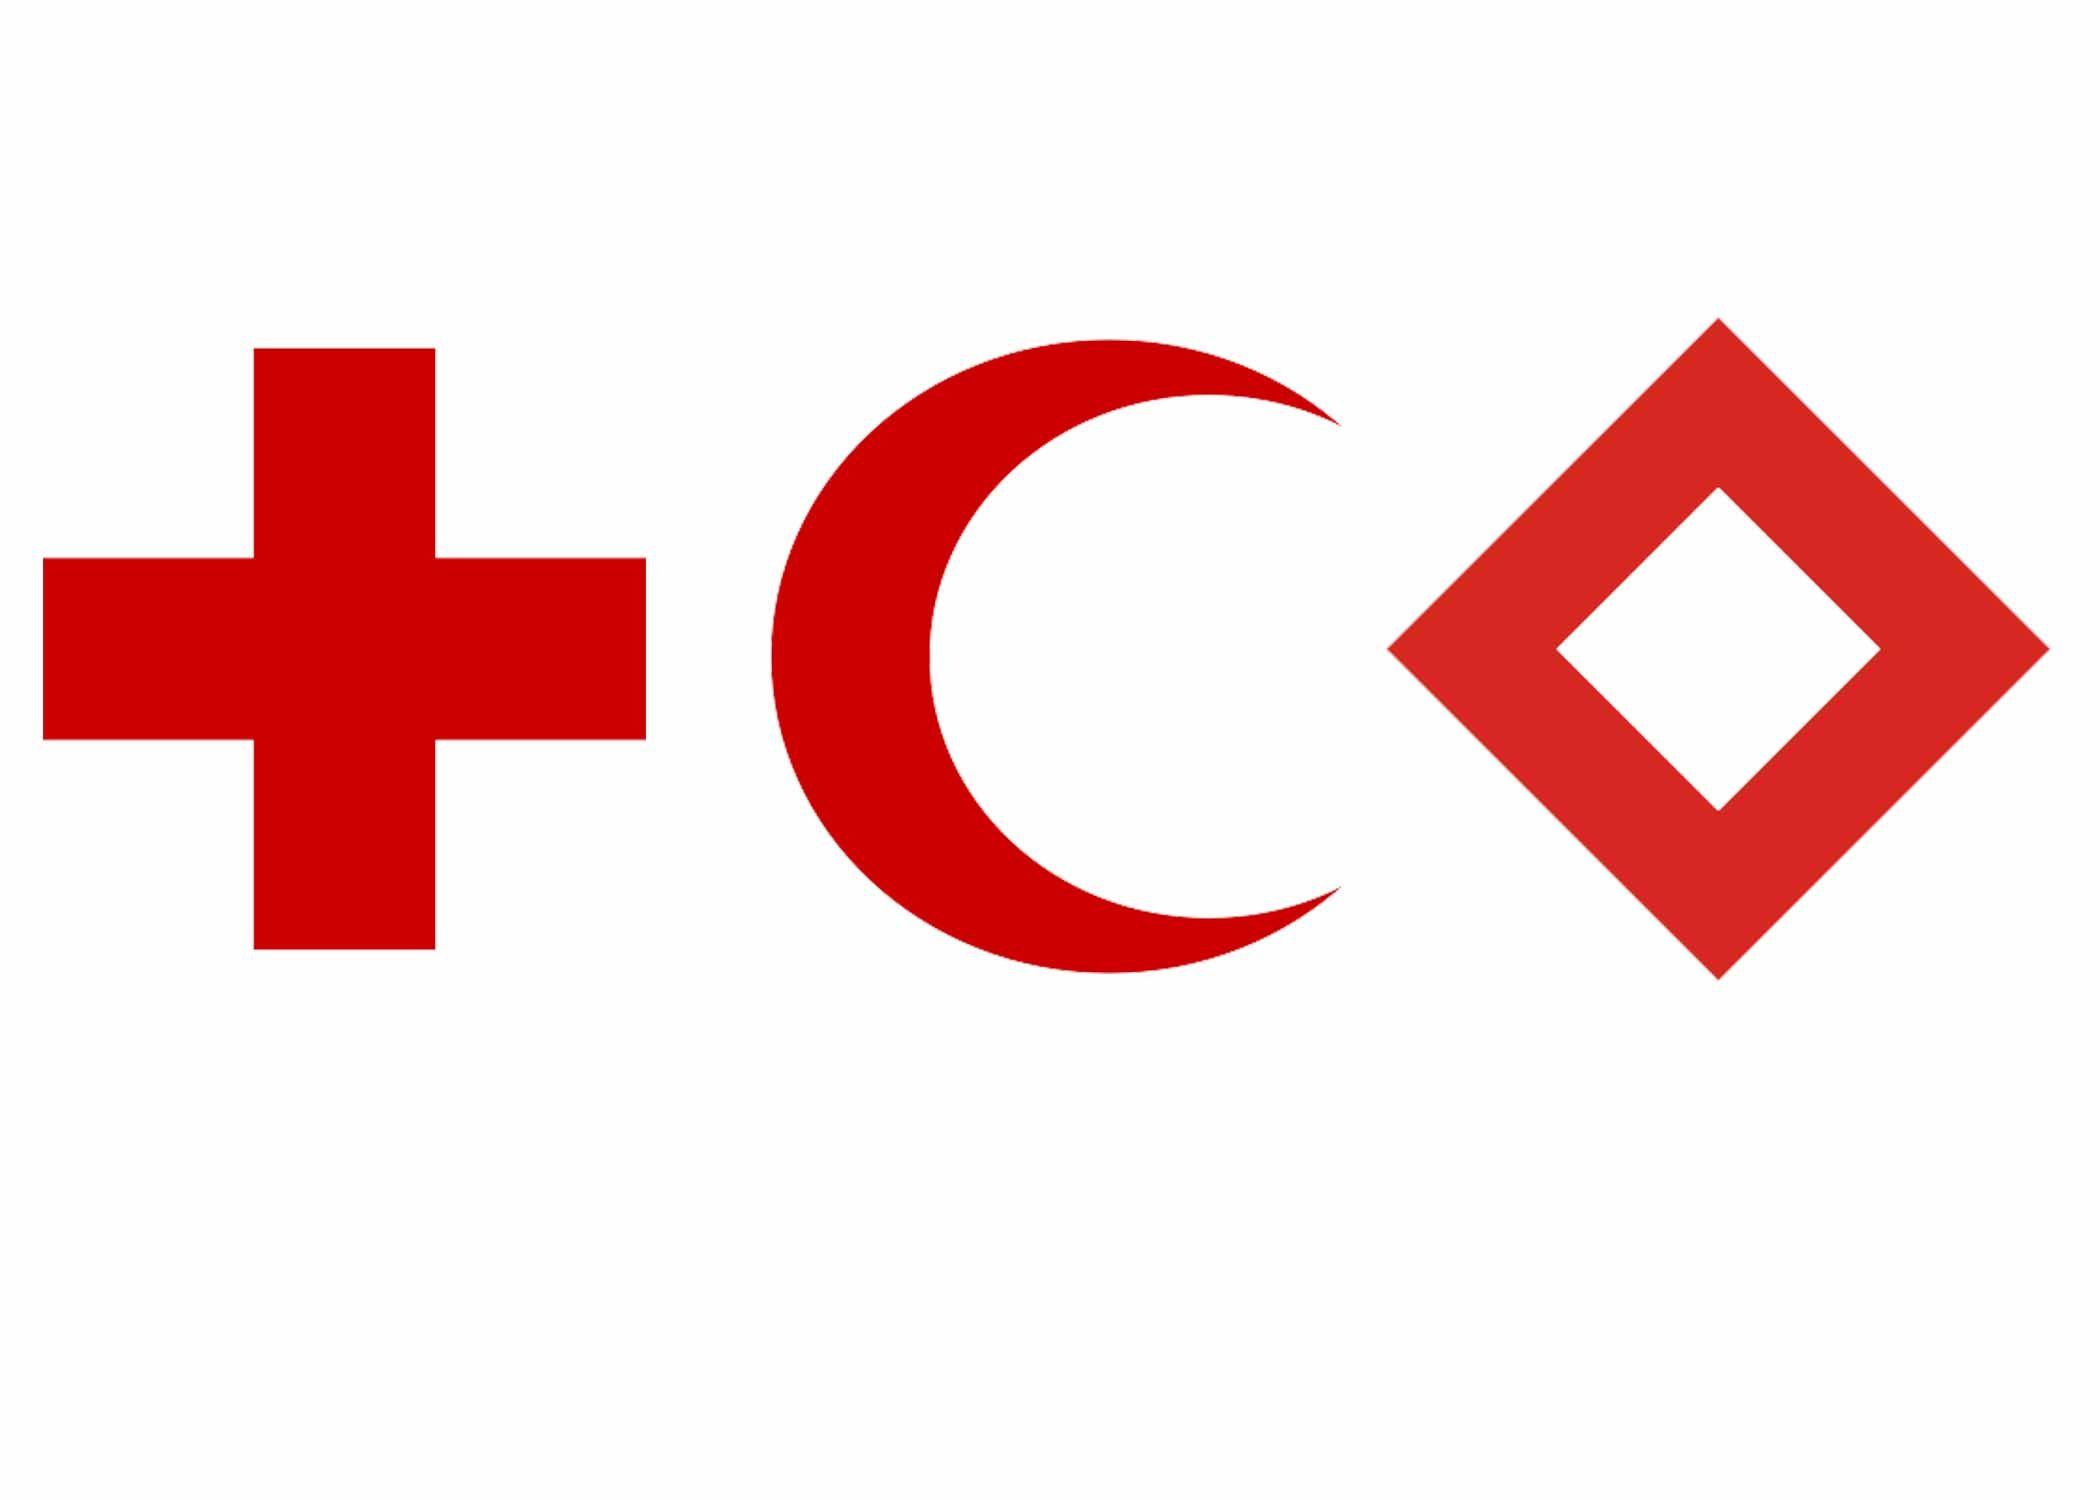 1863 International Red Cross Logo - Red Cross, Red Crescent, Red Crystal _ Original design: Henri Dunant